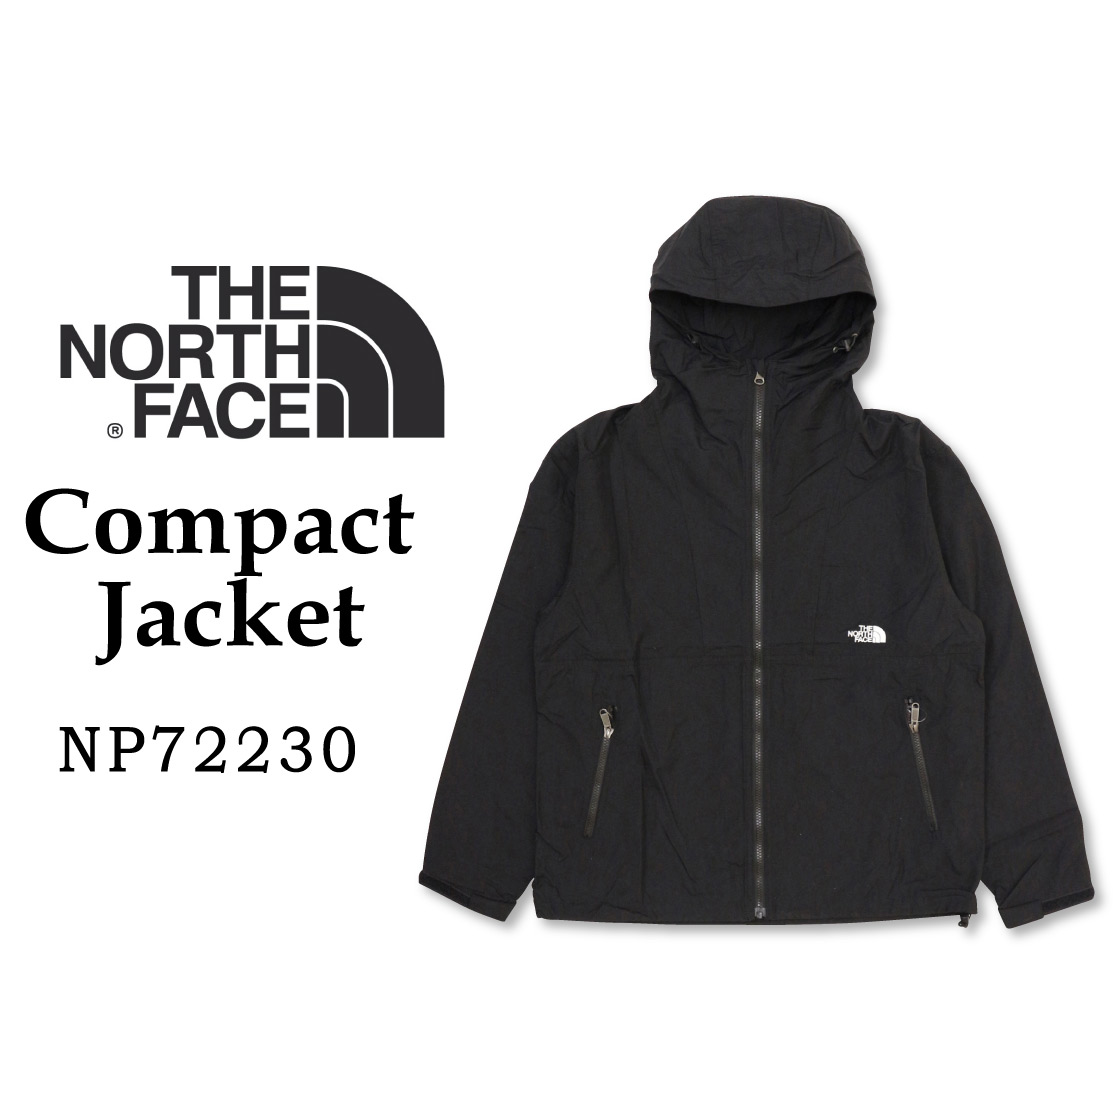 THE NORTH FACE ザ ノースフェイス Compact Jacket コンパクトジャケット NP72230 軽アウターアウトドア  シェルジャケット 撥水加工 : nf-np72230 : K-Aiya - 通販 - Yahoo!ショッピング